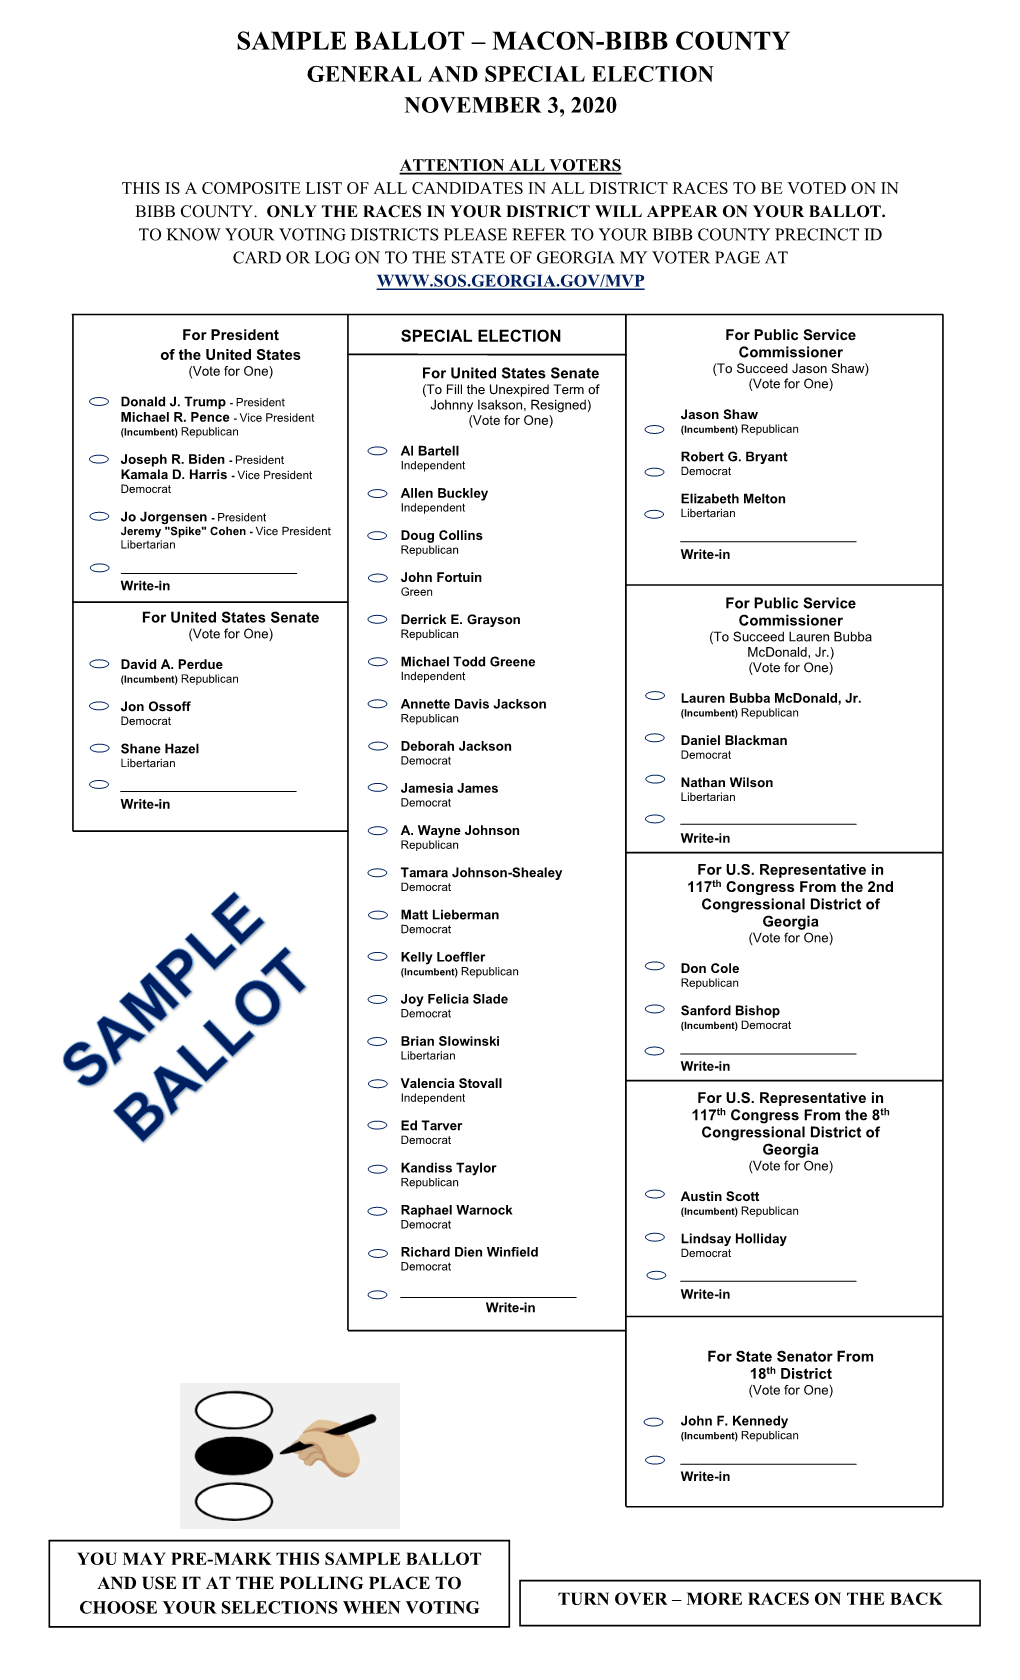 Sample Ballot – Macon-Bibb County General and Special Election November 3, 2020